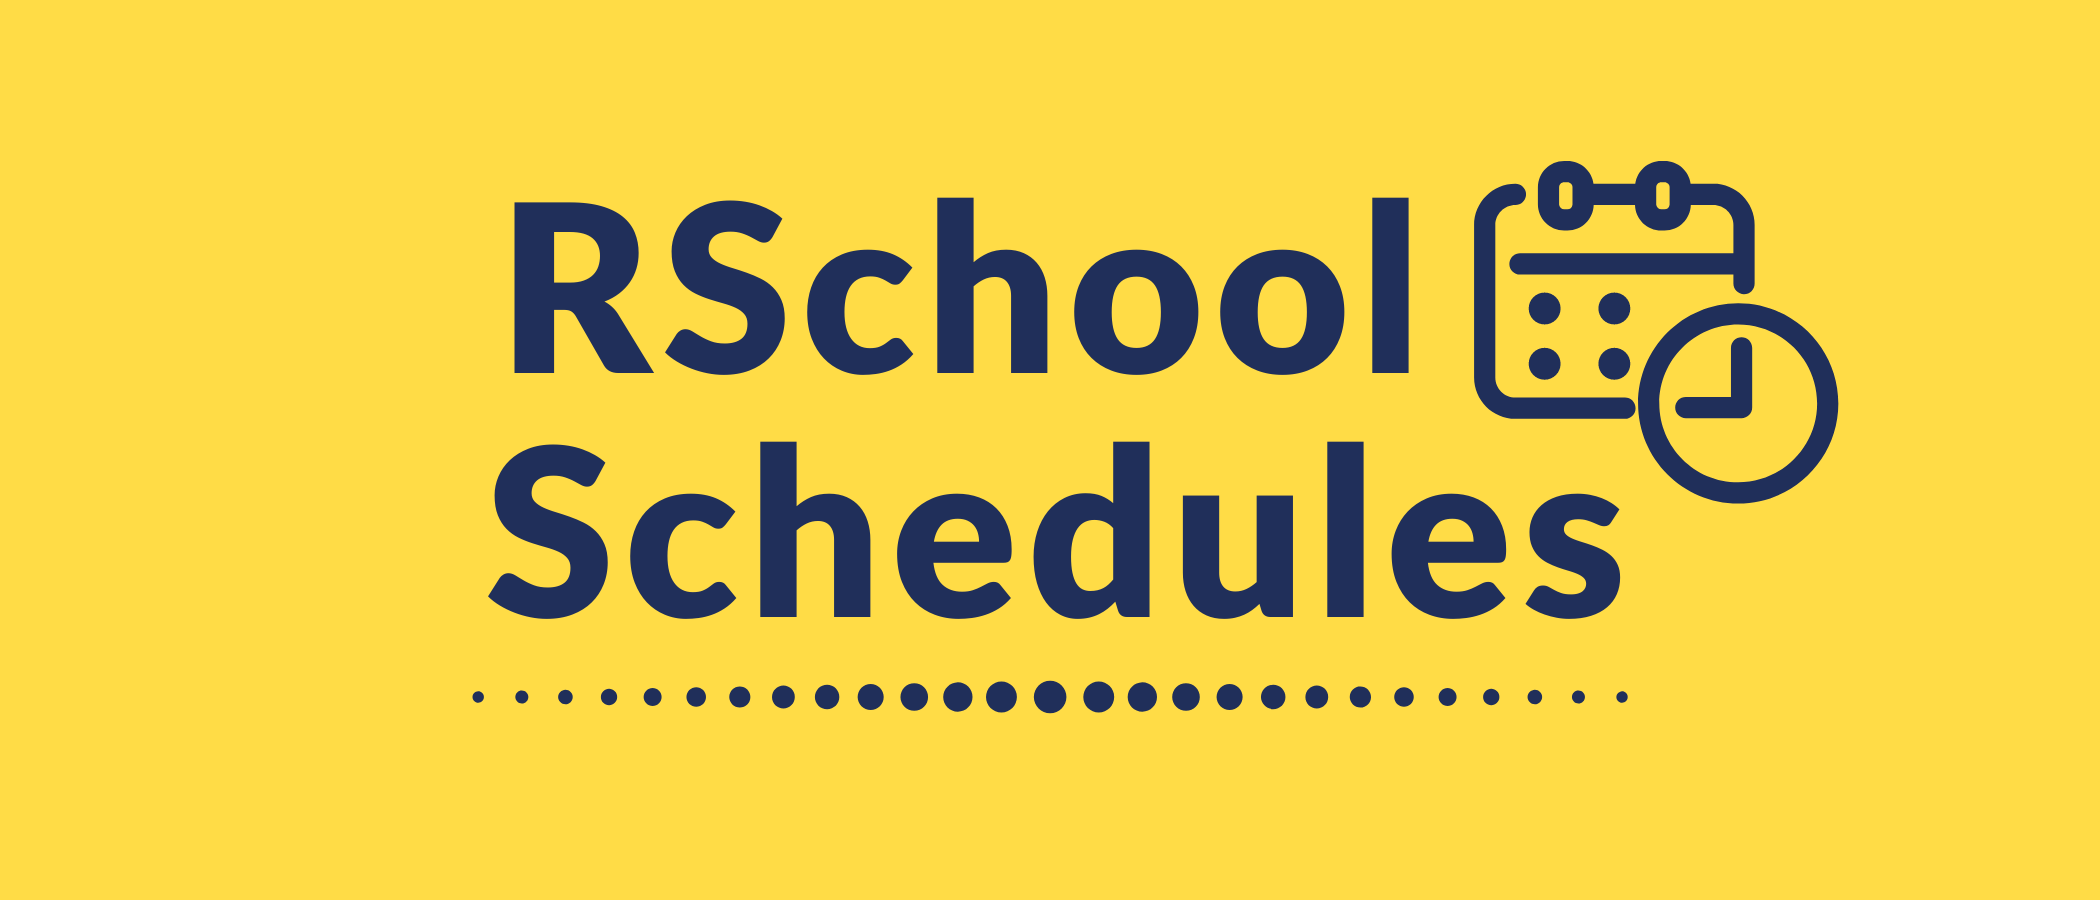 RSchool Schedules